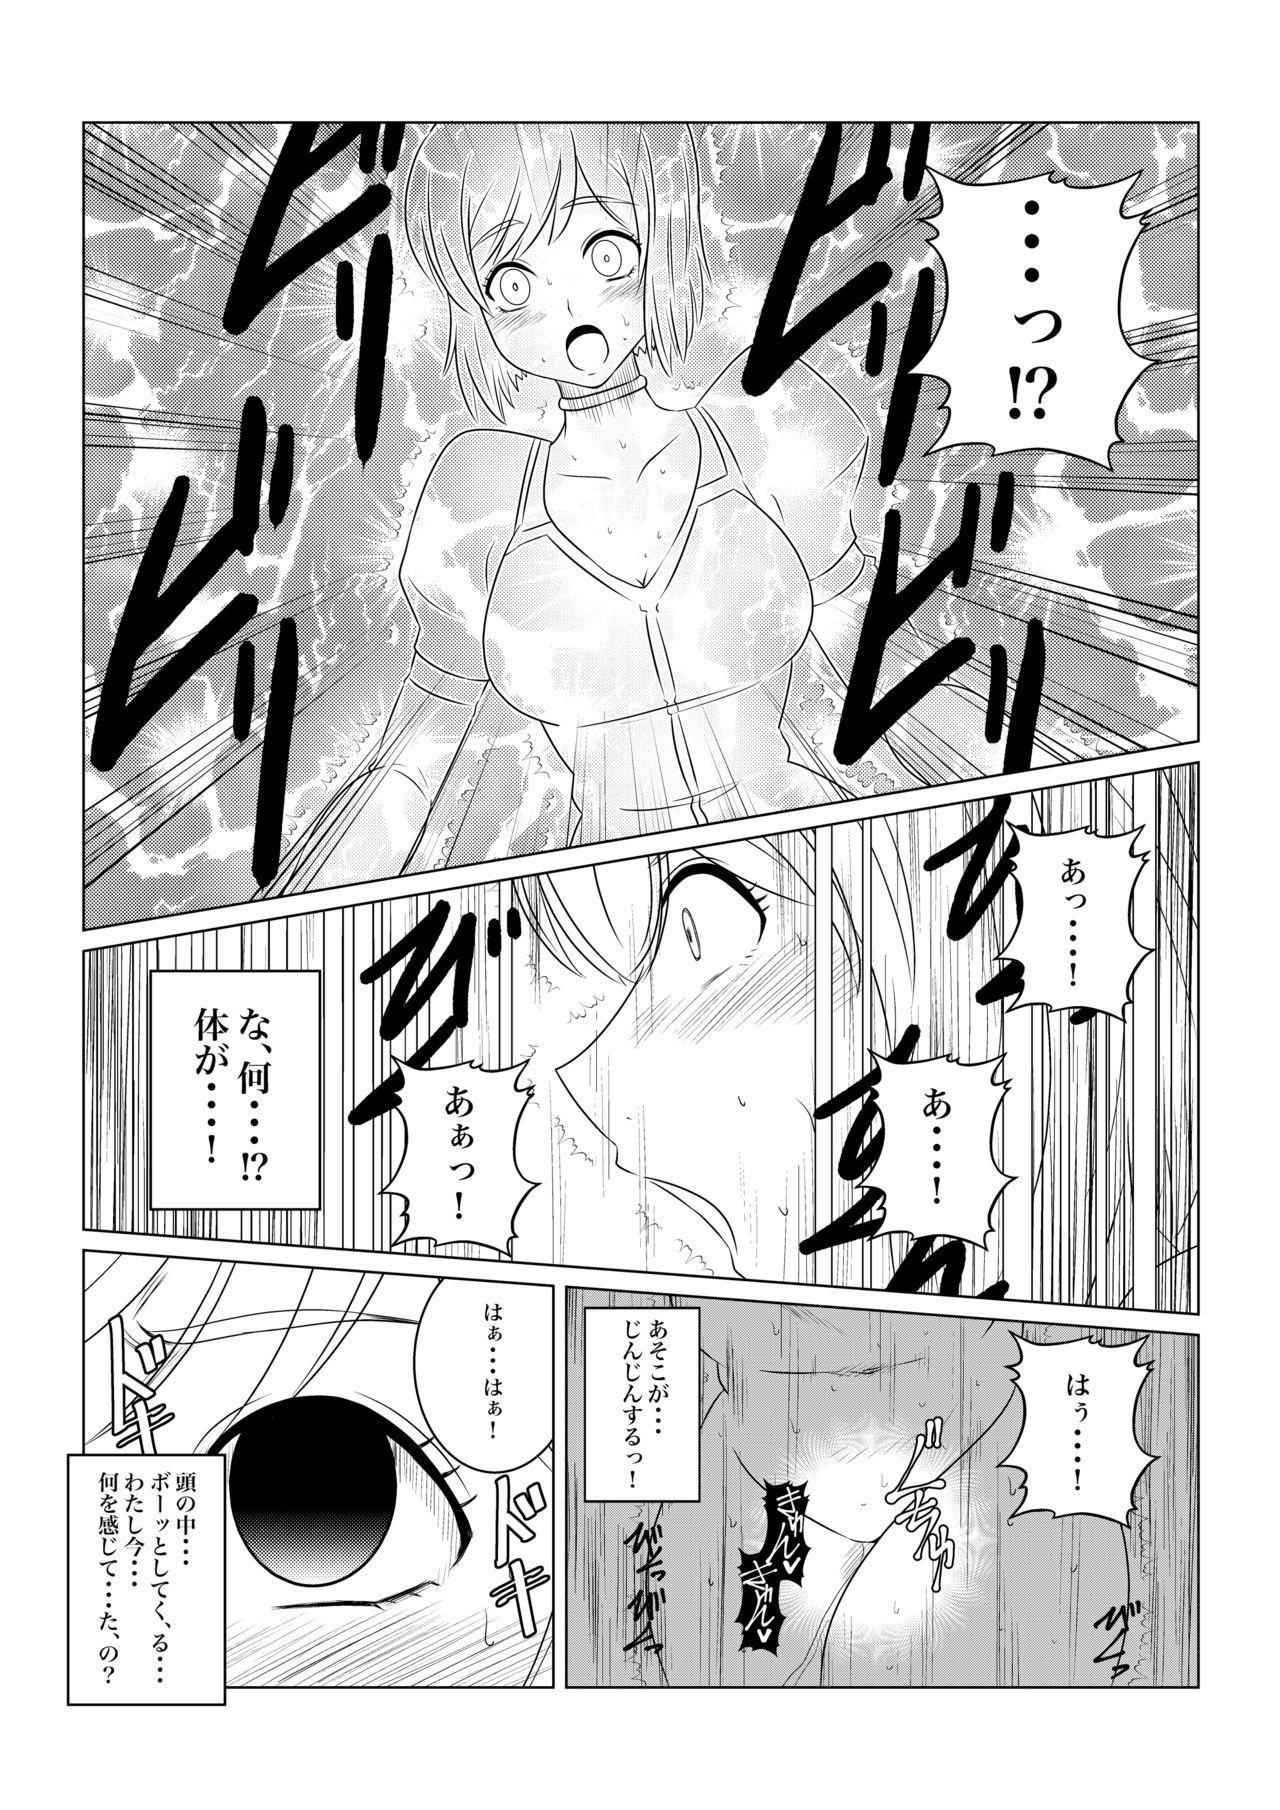 Suck Gekka Midarezaki - Tales of vesperia Mature Woman - Page 8